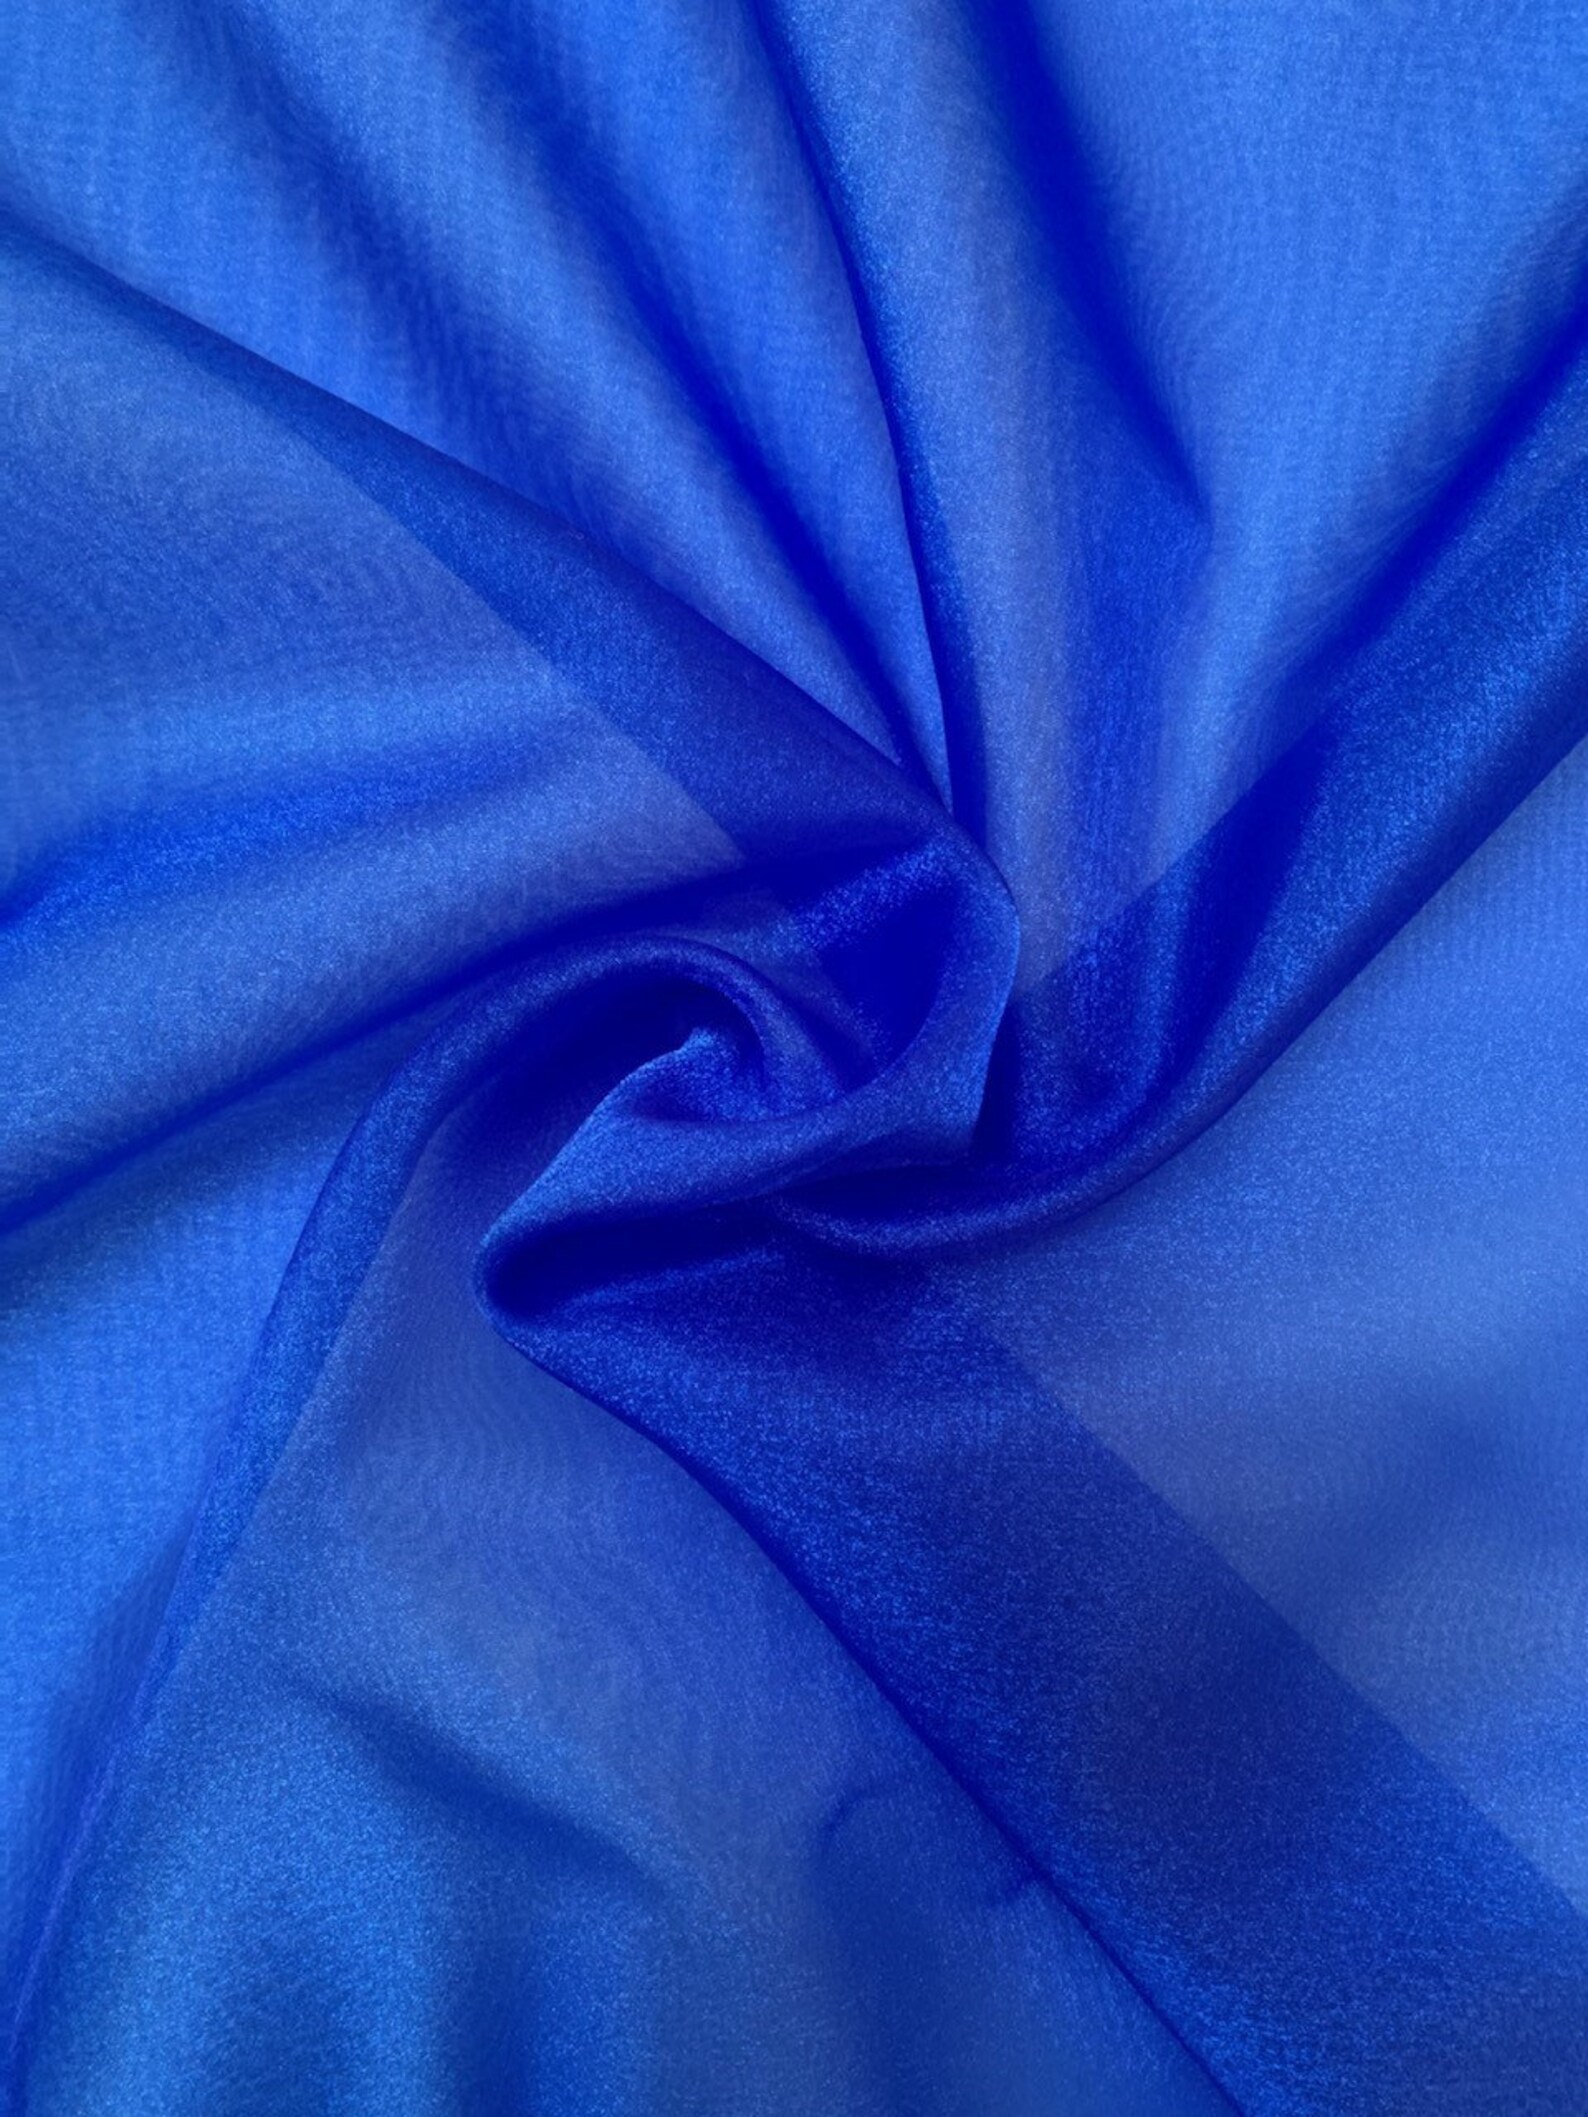 Royal Blue Sparkle Organza Fabric 45 per Yard Made in - Etsy